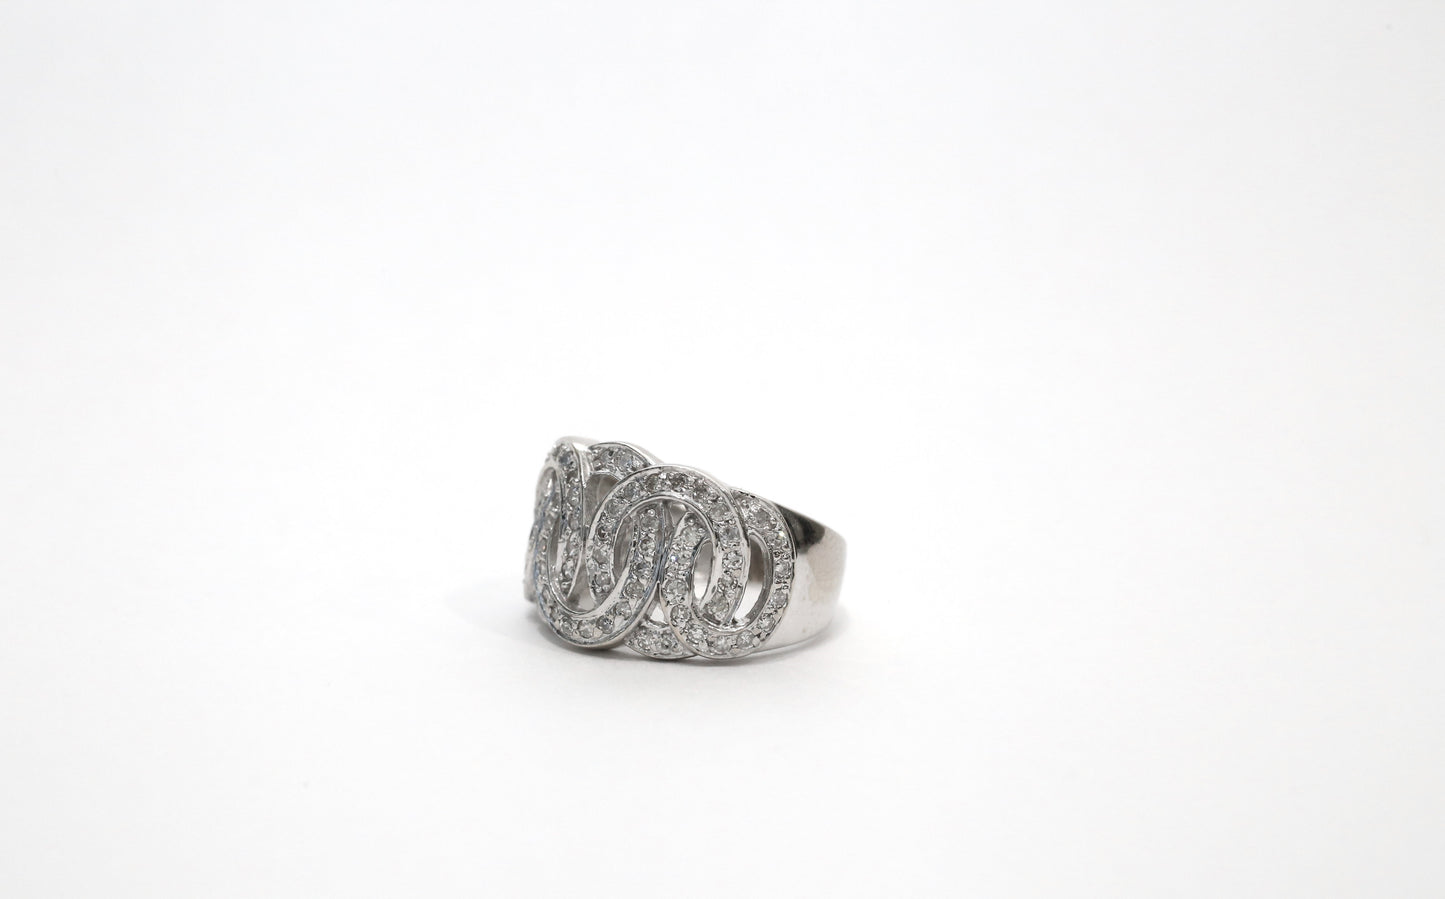 14k White Gold Multi-Diamond Ring, Size 5.5 - 5.0g